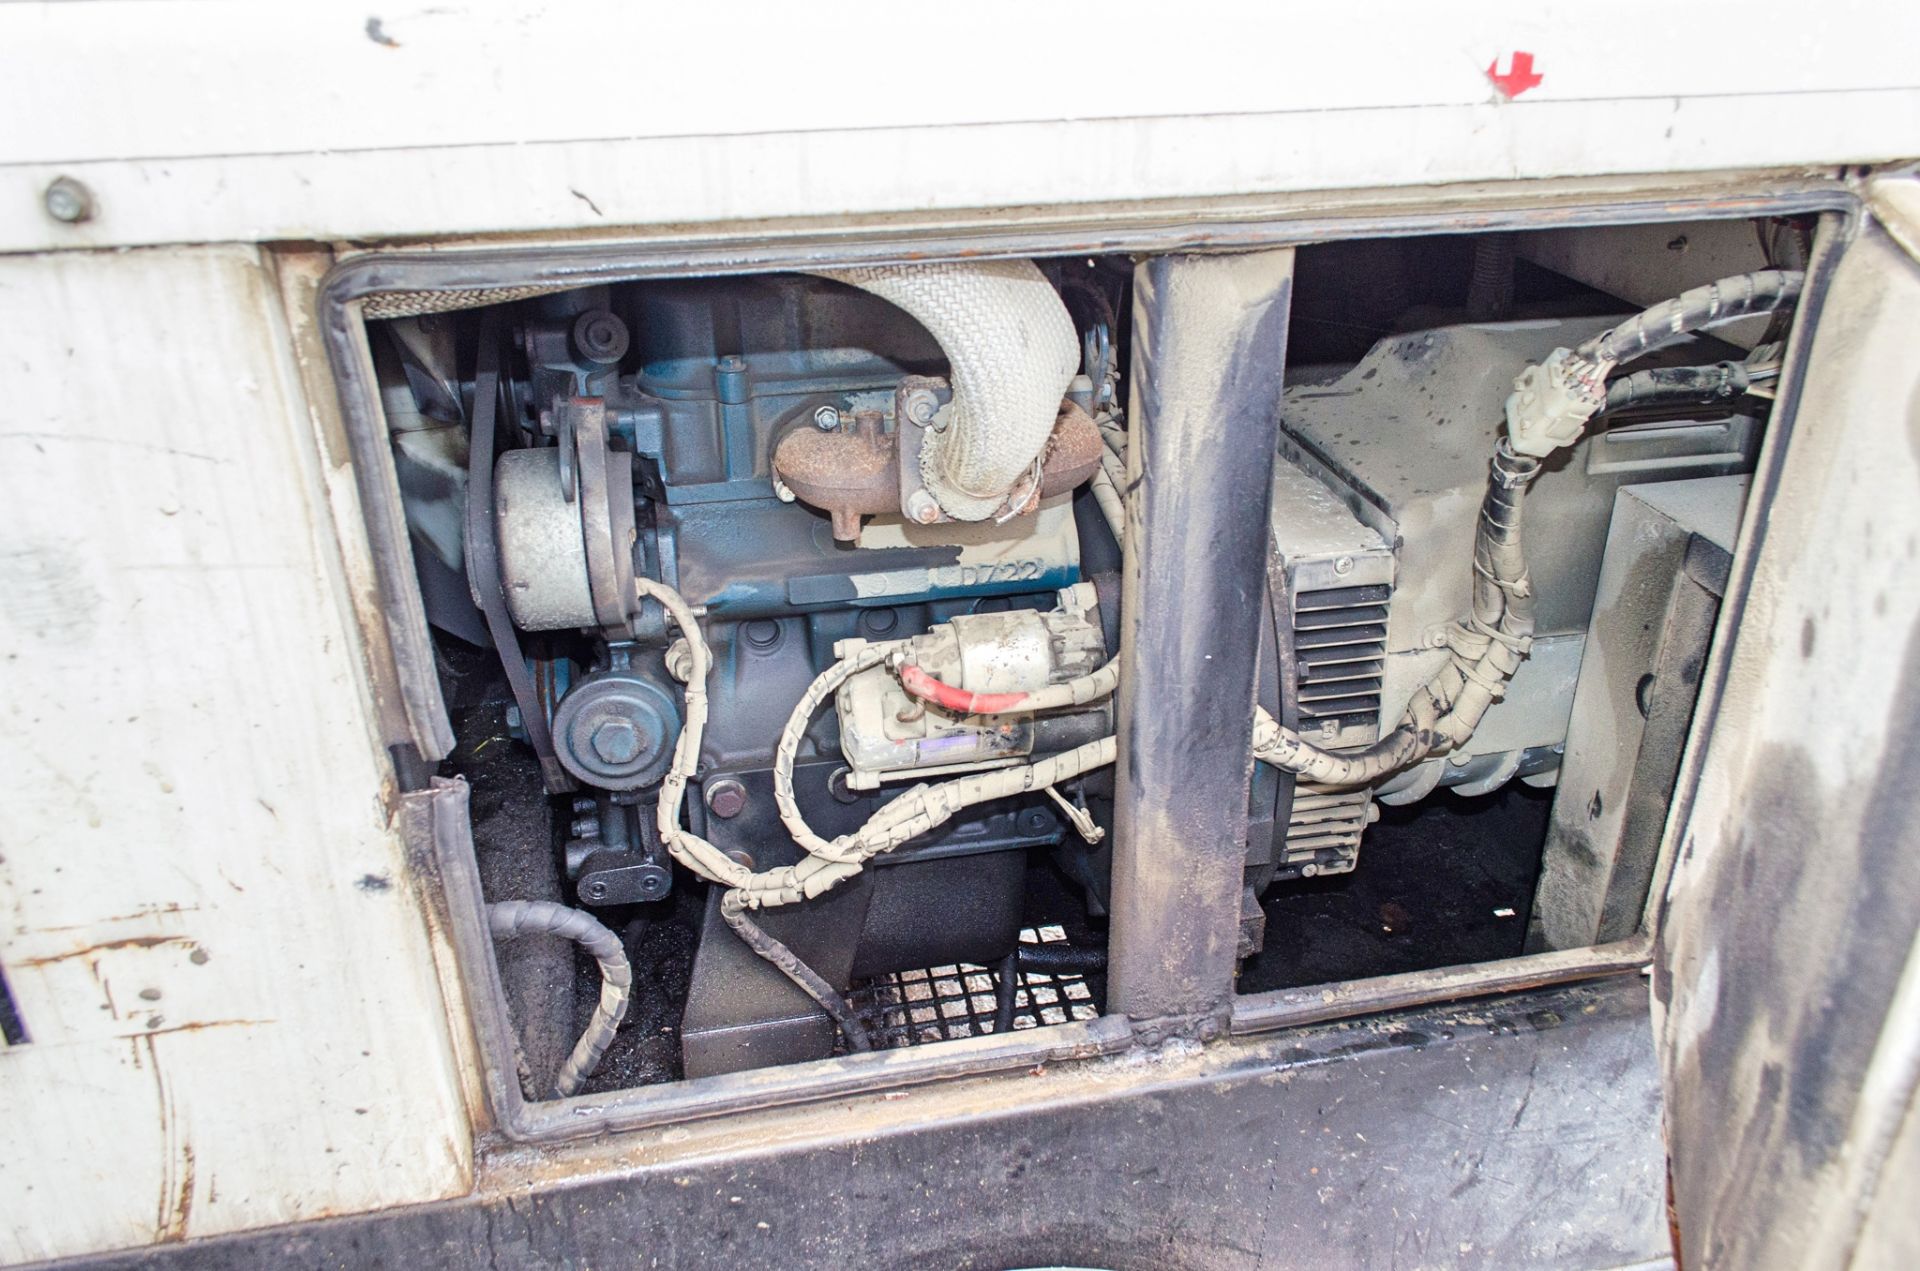 Stephill D10000S 10 kva diesel driven generator PF01344 - Image 4 of 5